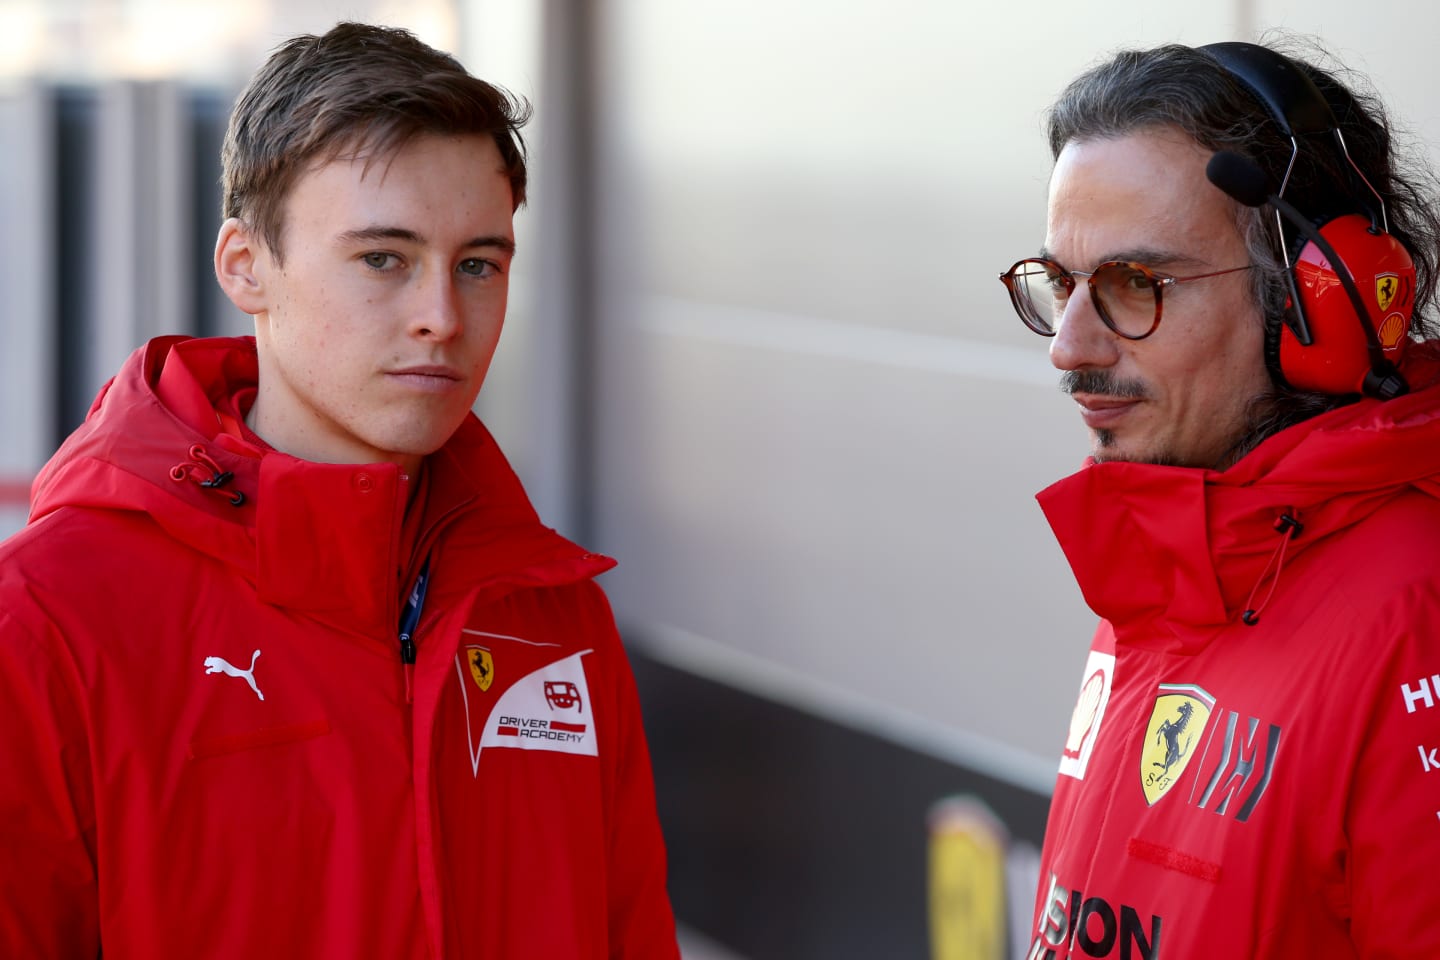 BARCELONA, SPAIN - FEBRUARY 19: Laurent Mekies, Ferrari Sporting Director talks with Ferrari